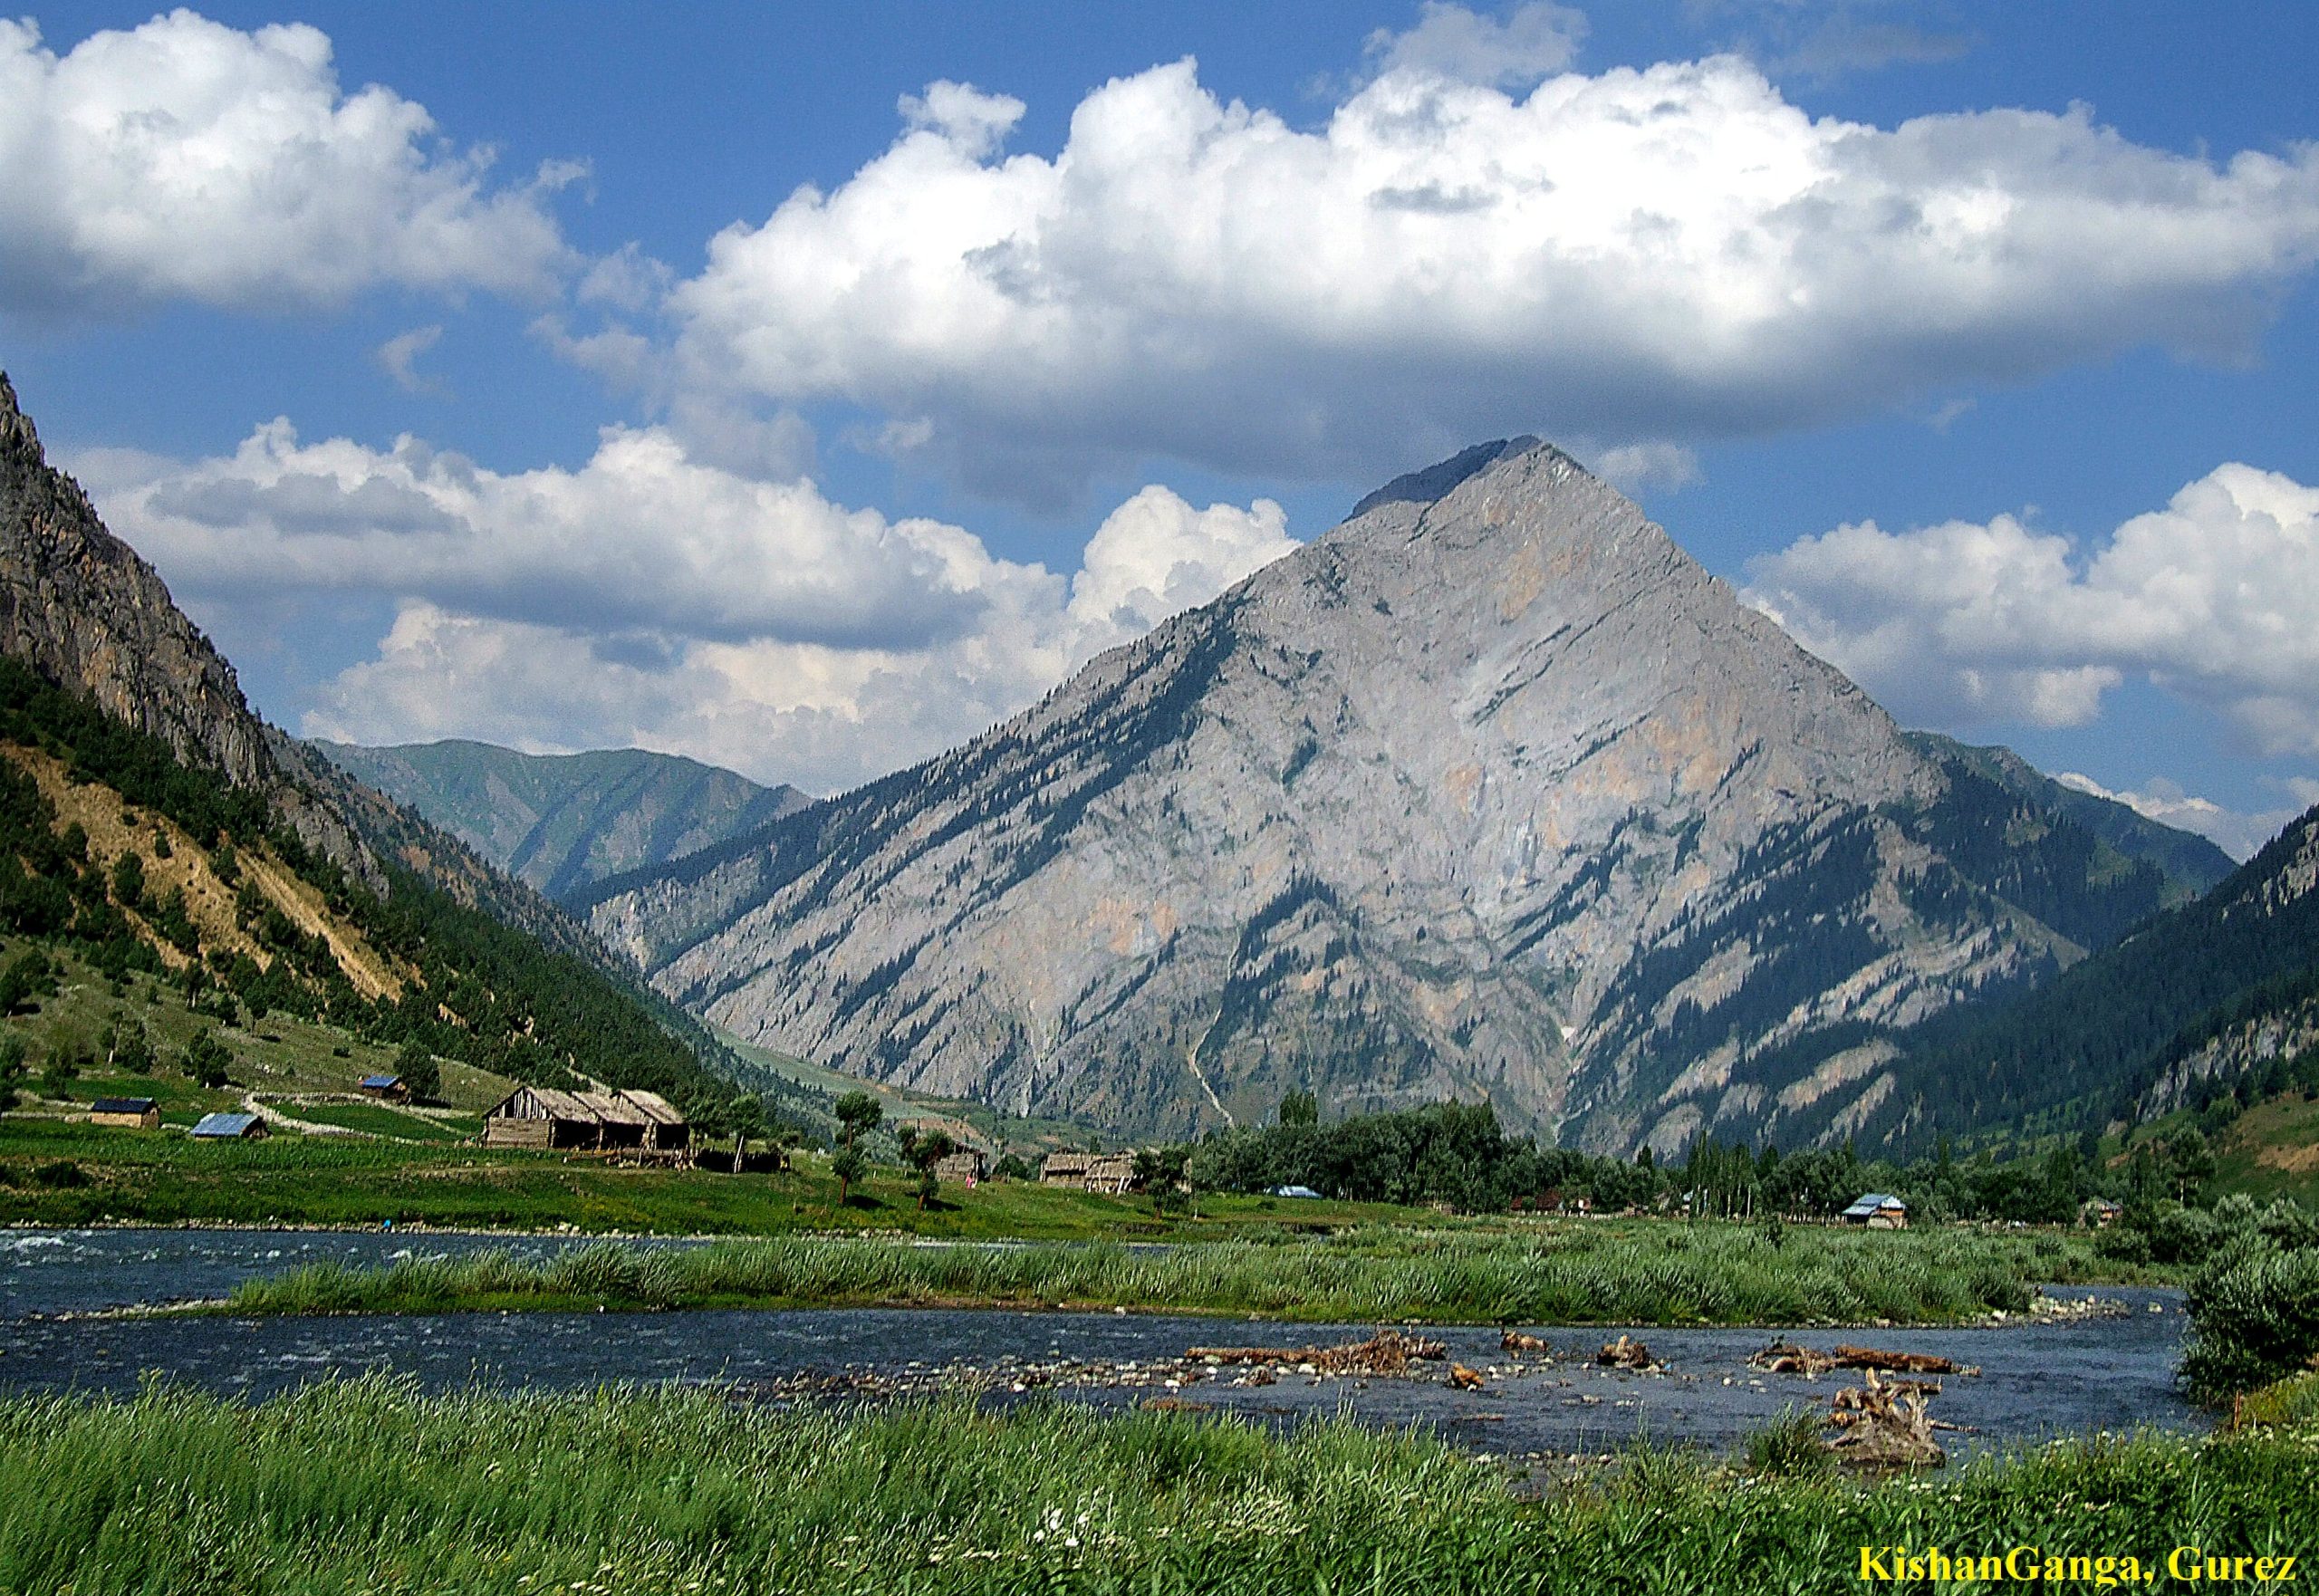 Traditions meet travelers: Gurez Valley prepares for cultural exchange in Kashmir's tourism boom